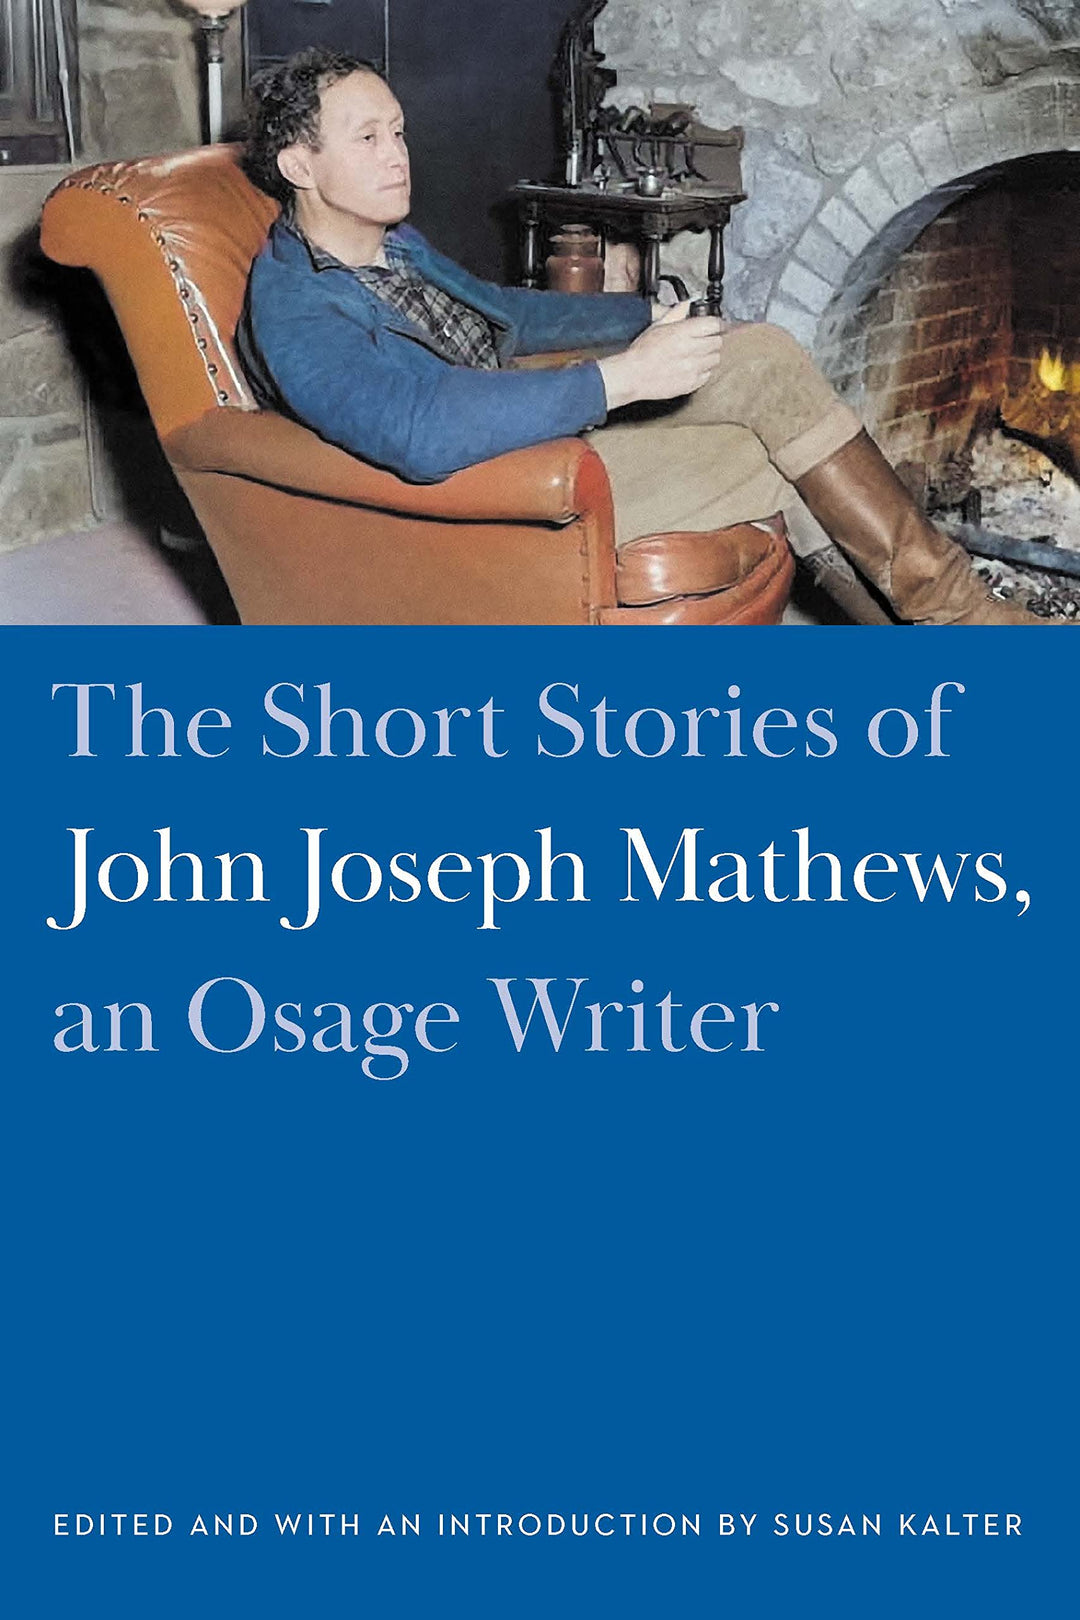 The Short Stories of John Joseph Mathews, an Osage Writer edited by Susan Kalter